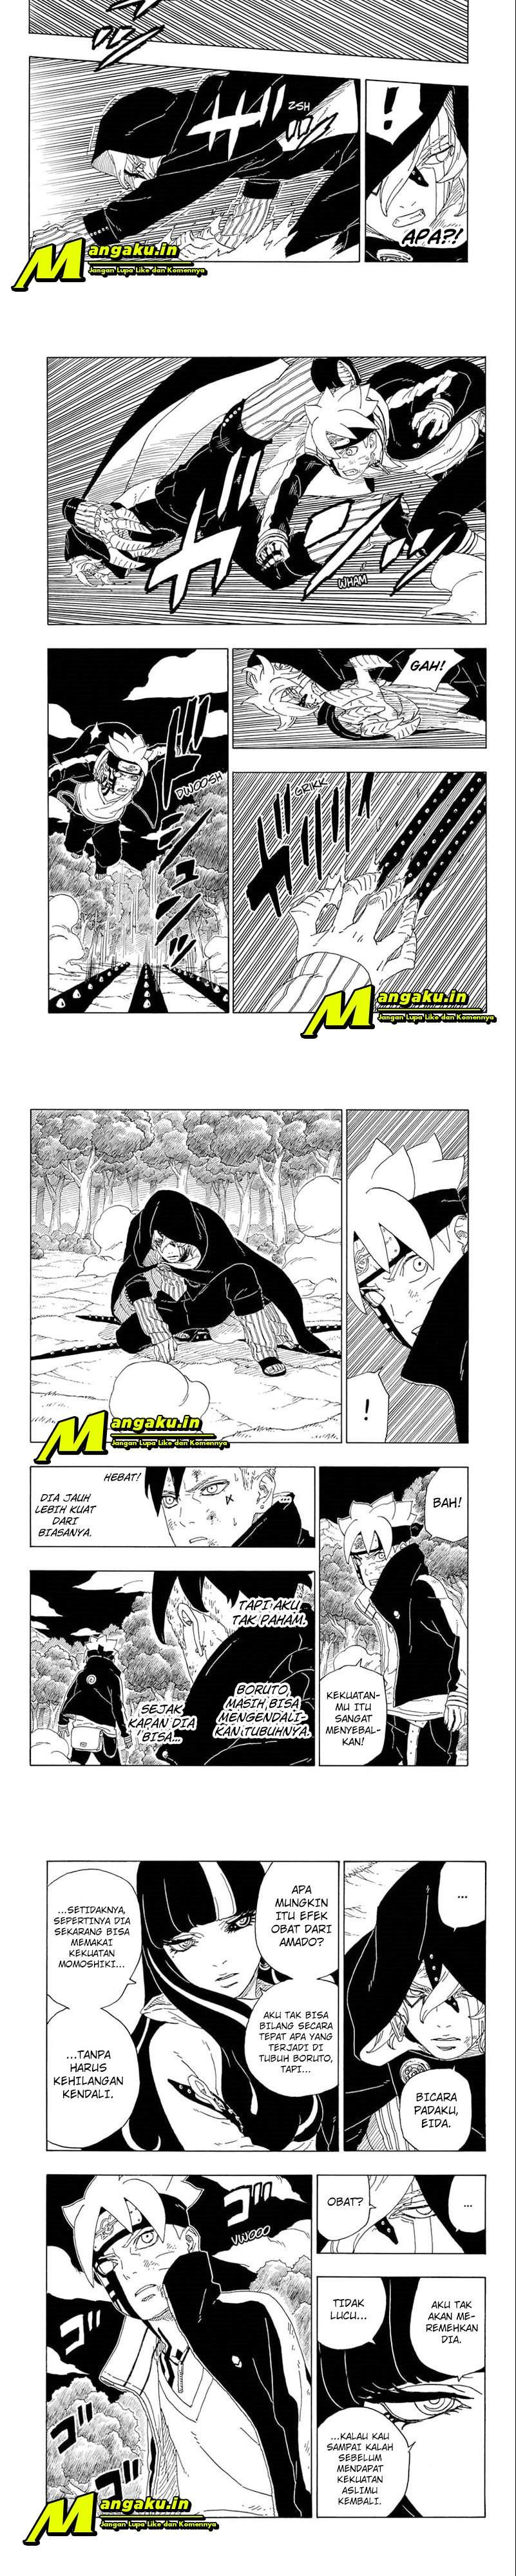 Boruto: Naruto Next Generations Chapter 64.1